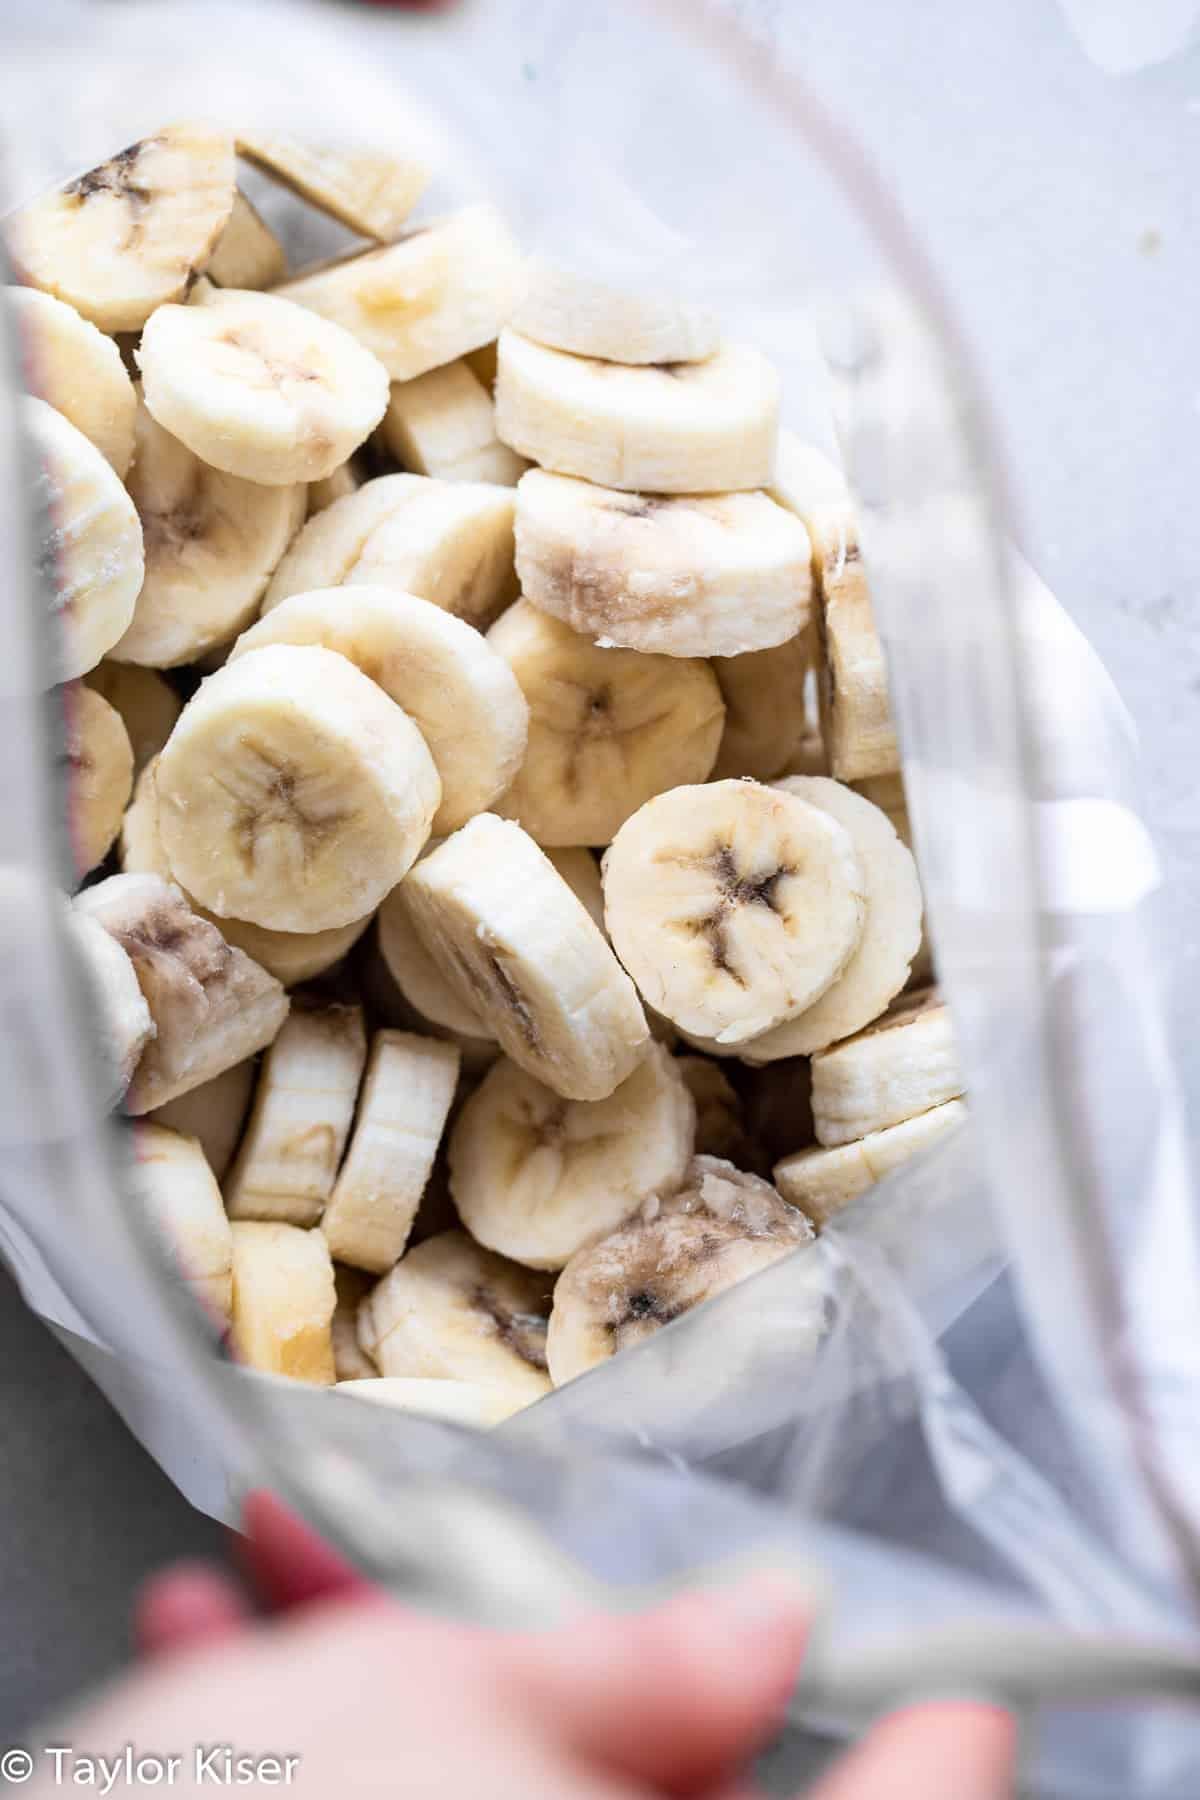 sliced bananas in a bag